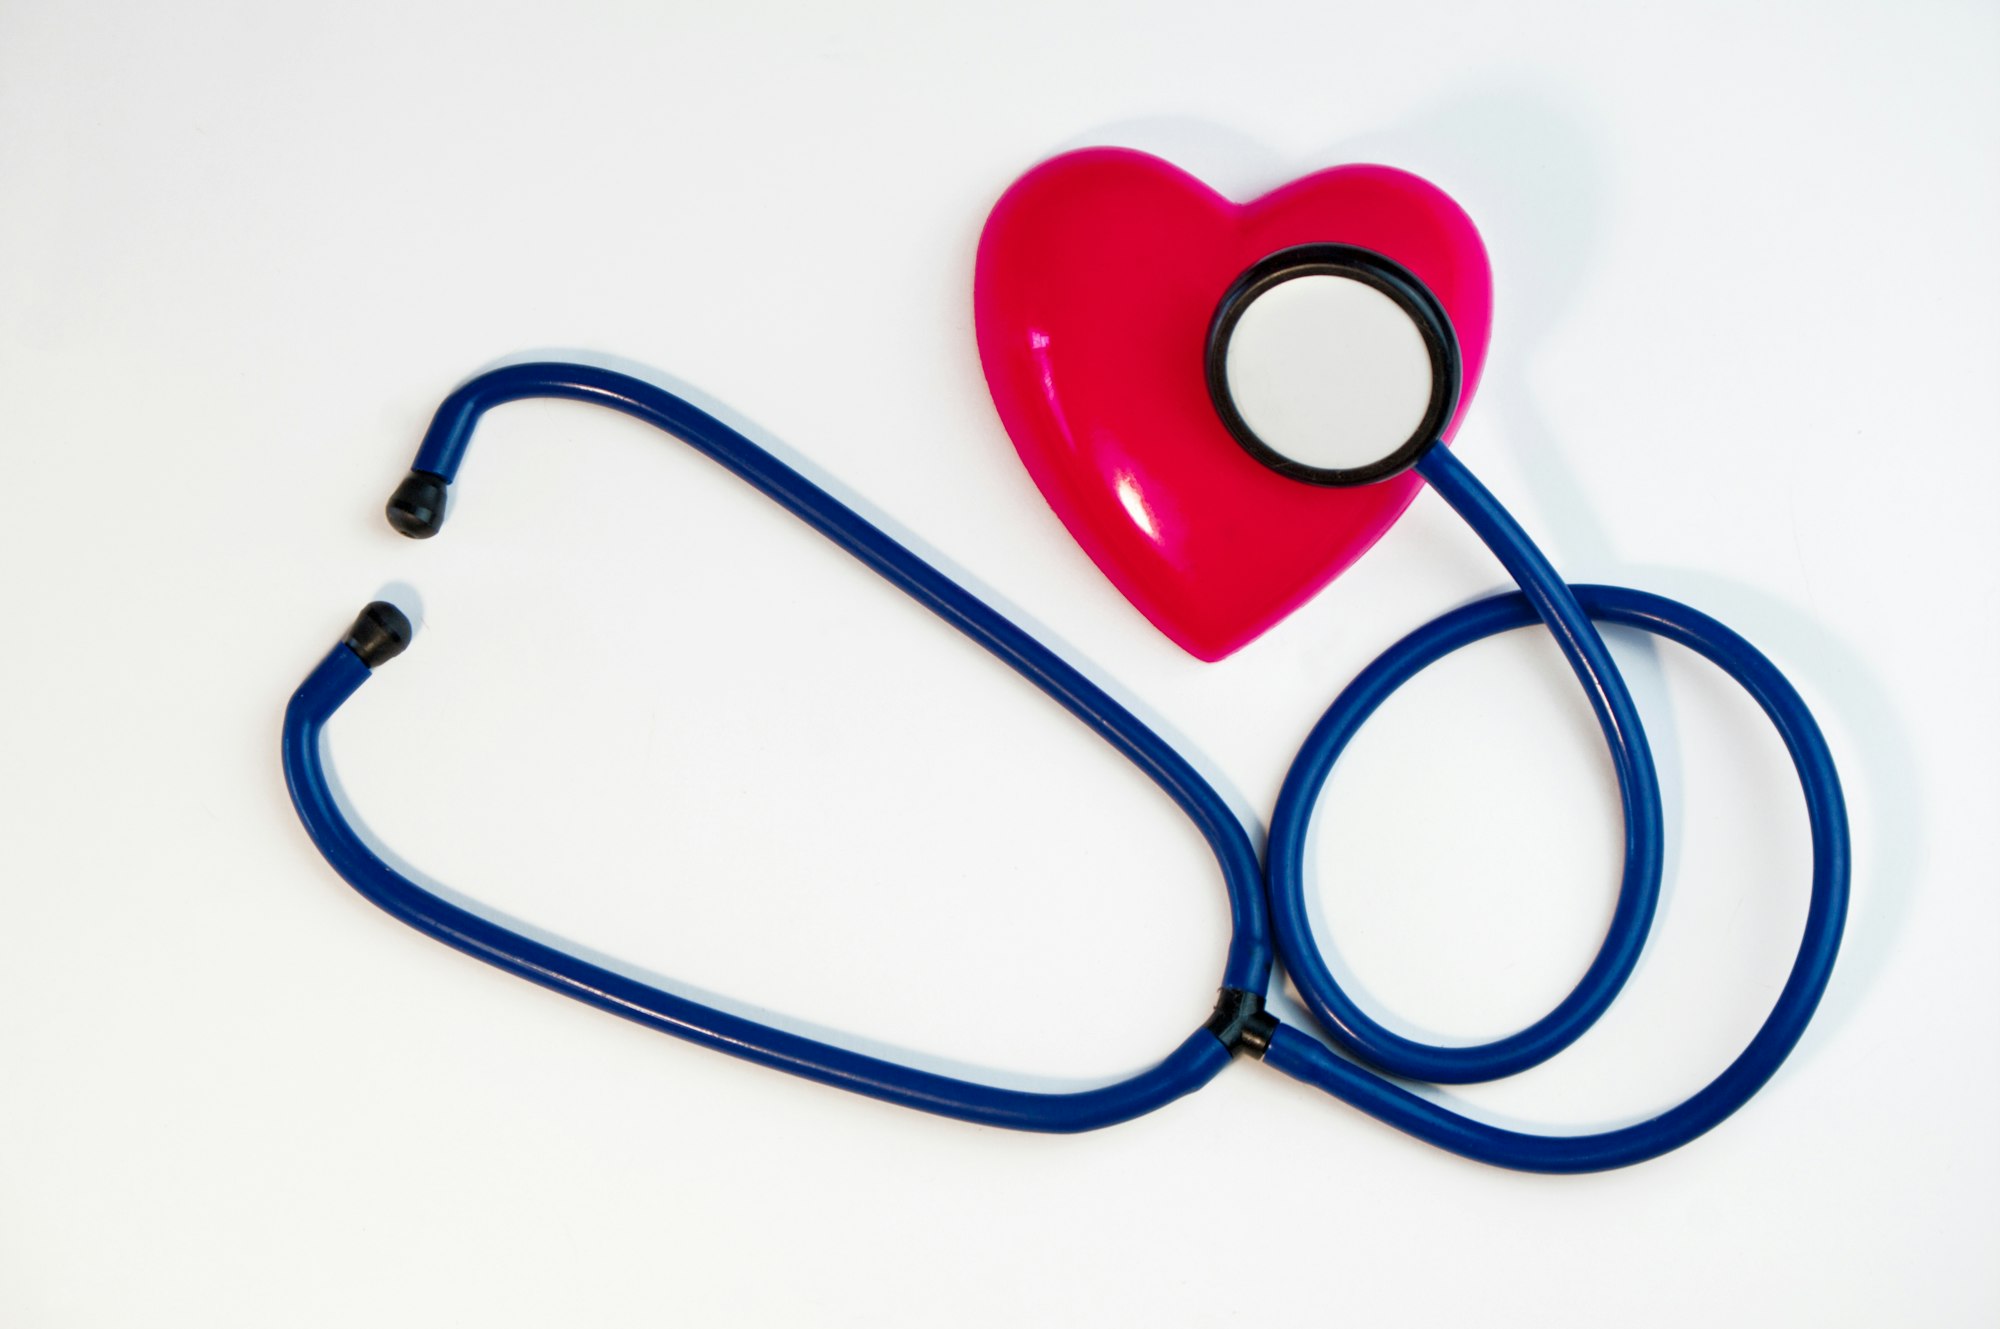 stethoscope and heart symbolizing heart health,